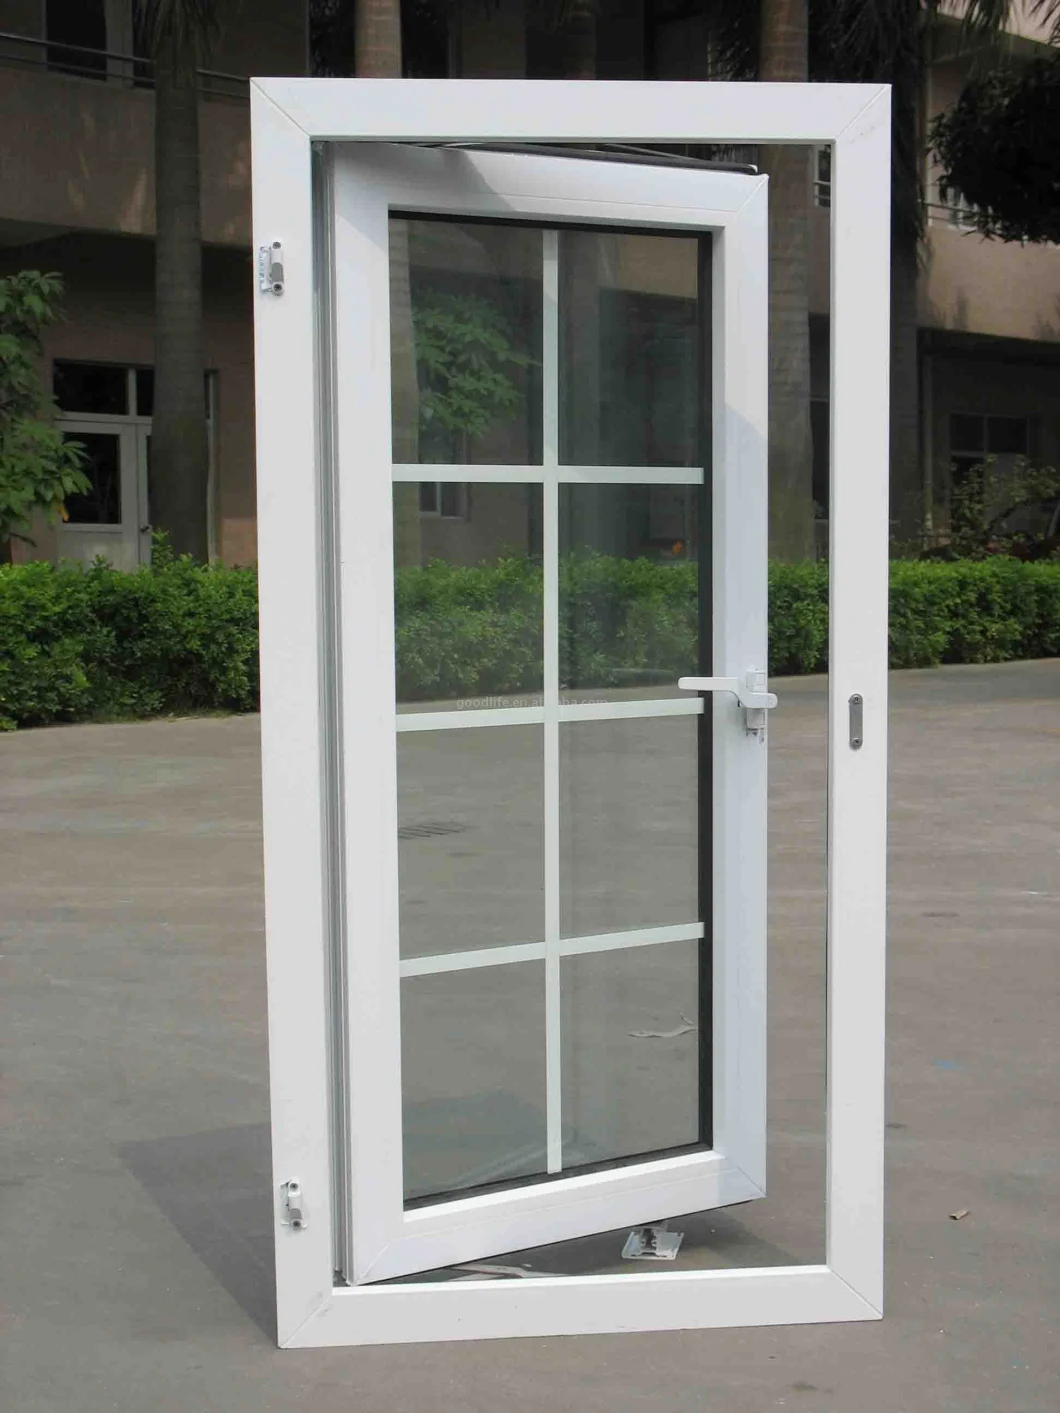 Plastic UPVC/PVC Double Glazed Windows Price with Grill Design